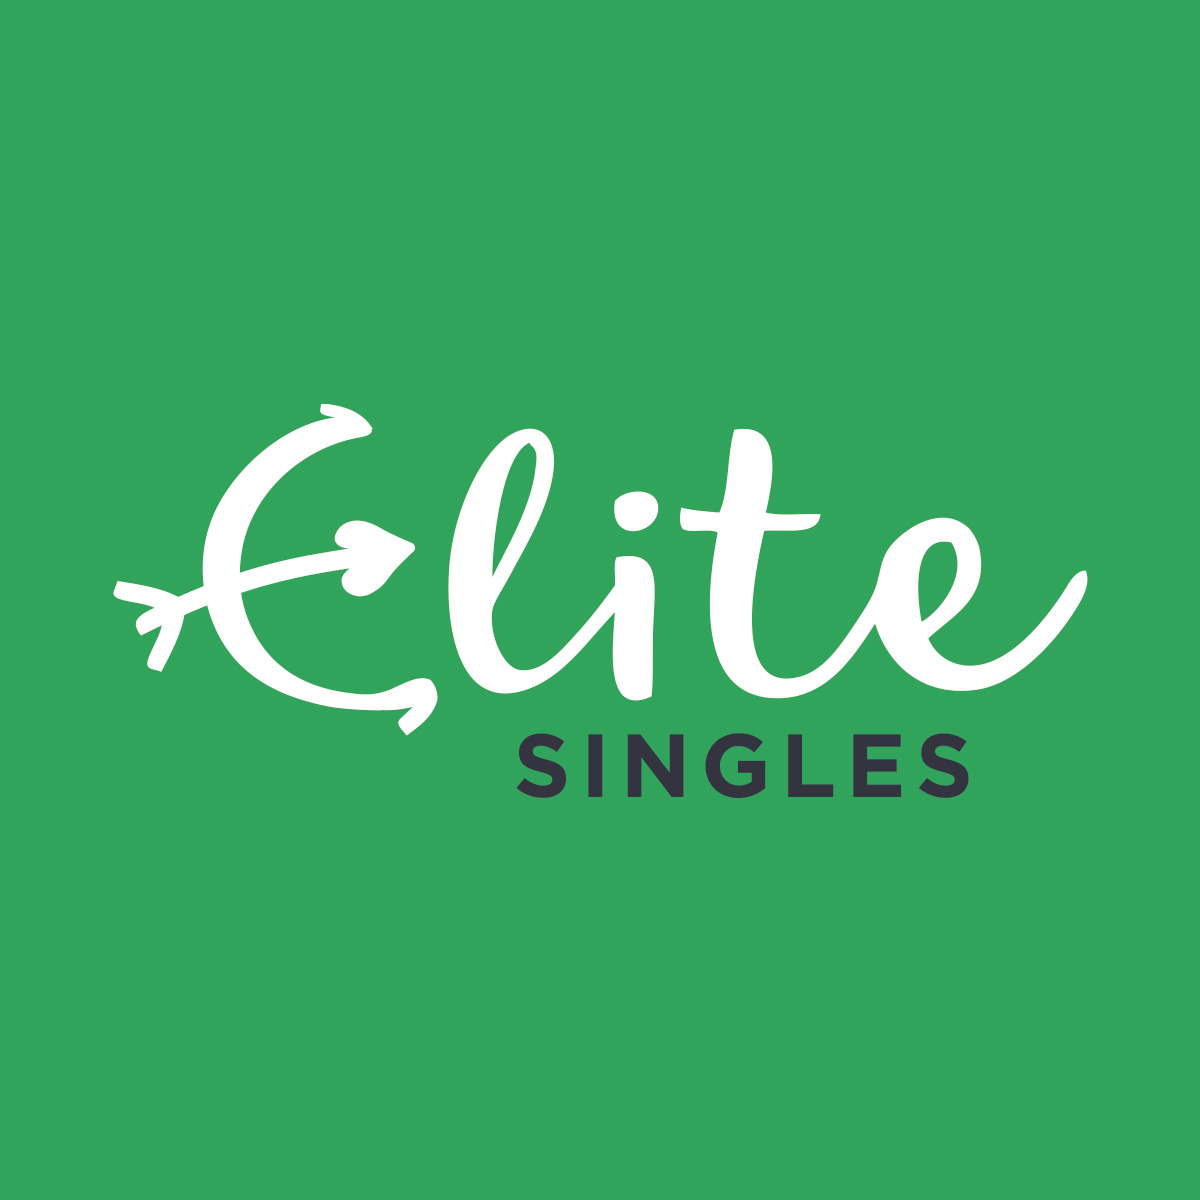 Elite singles login usa